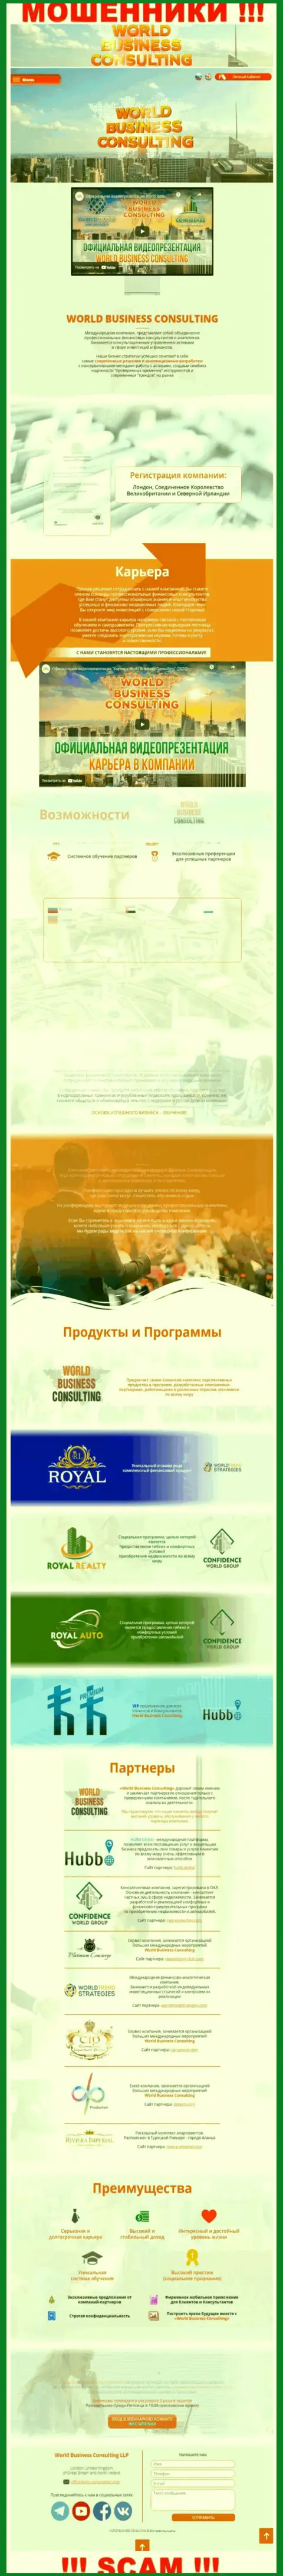 Ресурс мошенников World Business Consulting